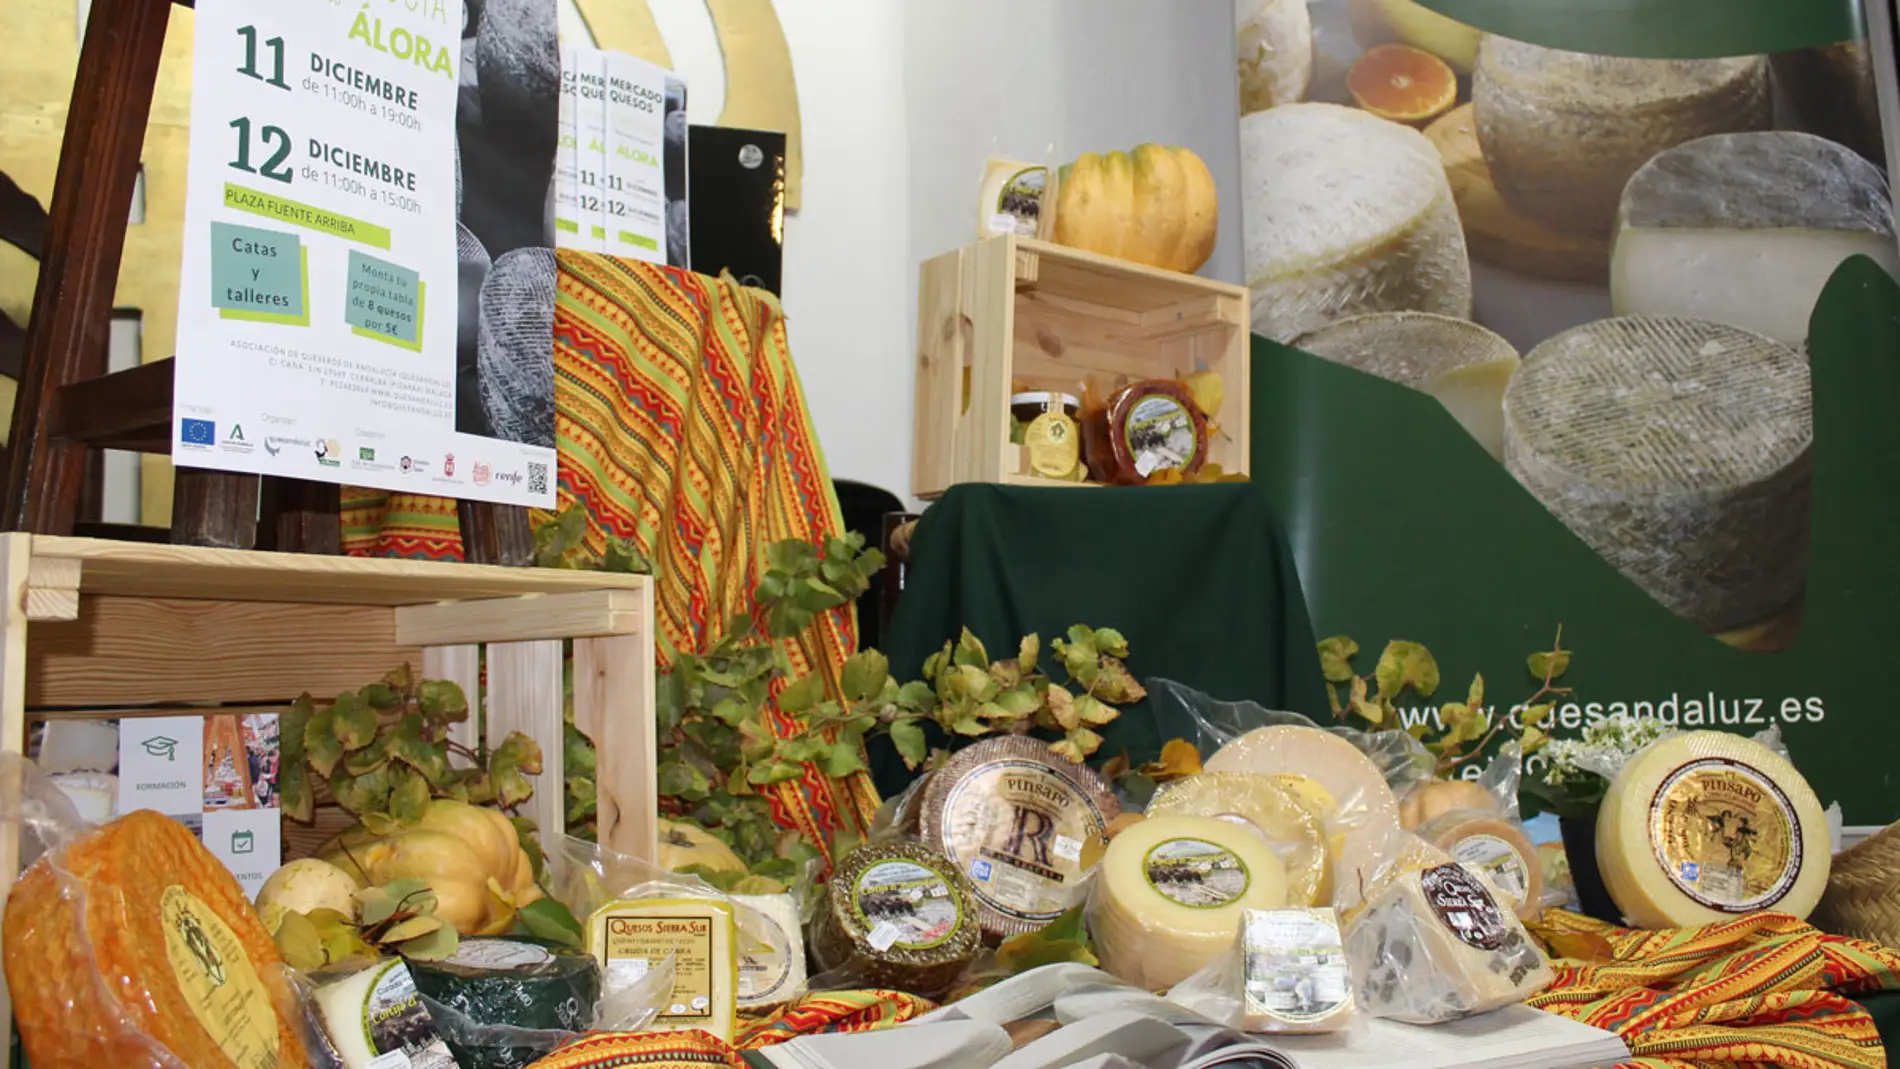 IX Mercado de Quesos de Andalucía “Acércate al queso” en Álora